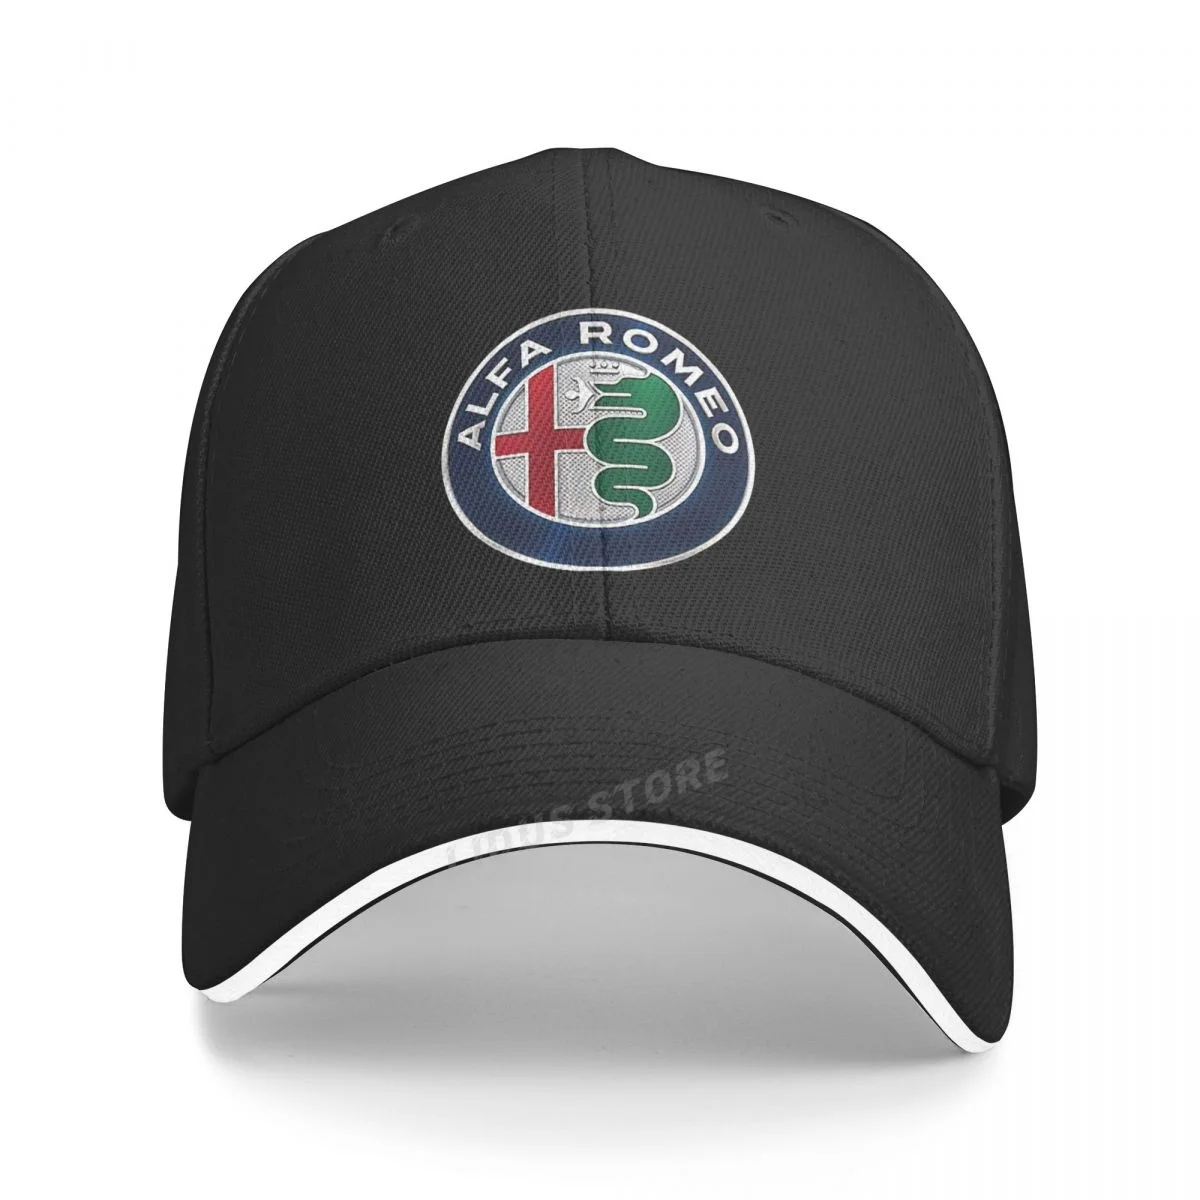 New Alfa Romeo Baseball Cap Men And Women Unisex Hat Cool Outdoor Sport Caps